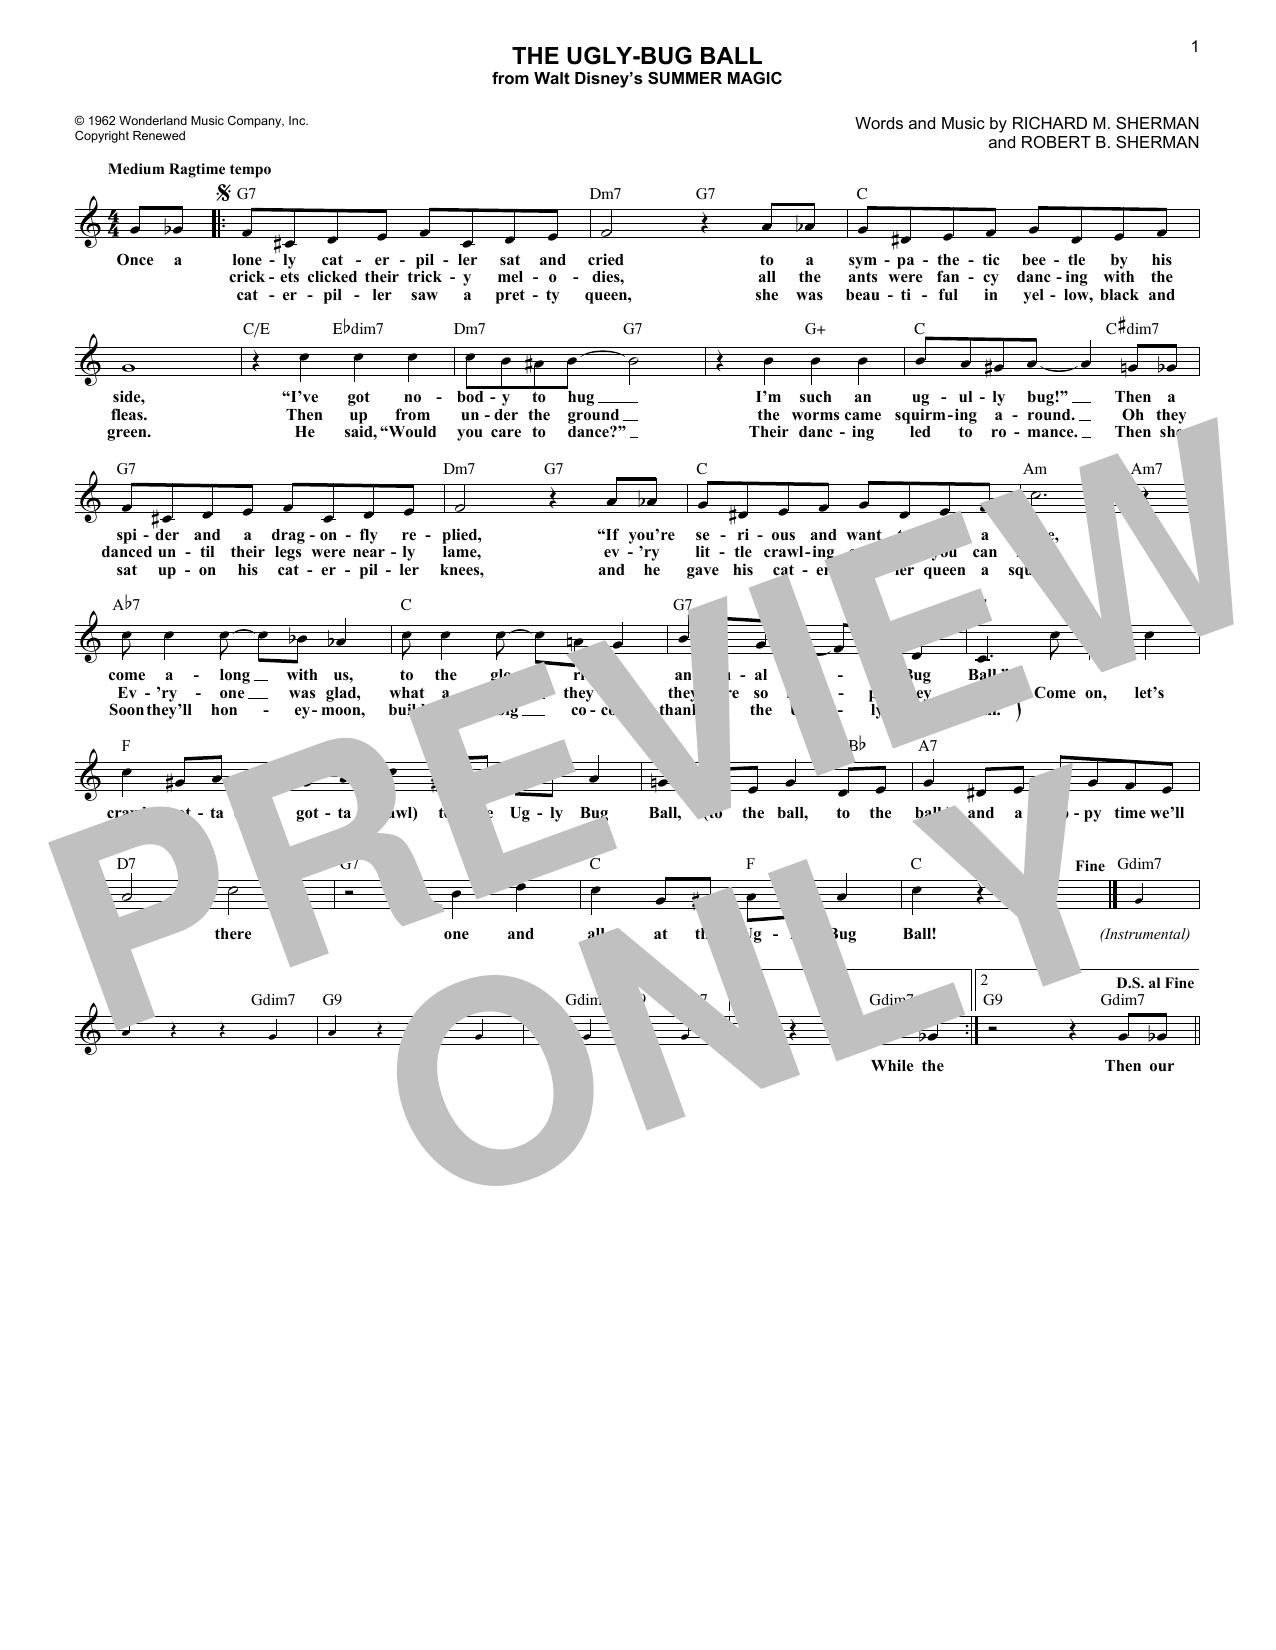 Richard M. Sherman The Ugly-Bug Ball sheet music notes and chords. Download Printable PDF.